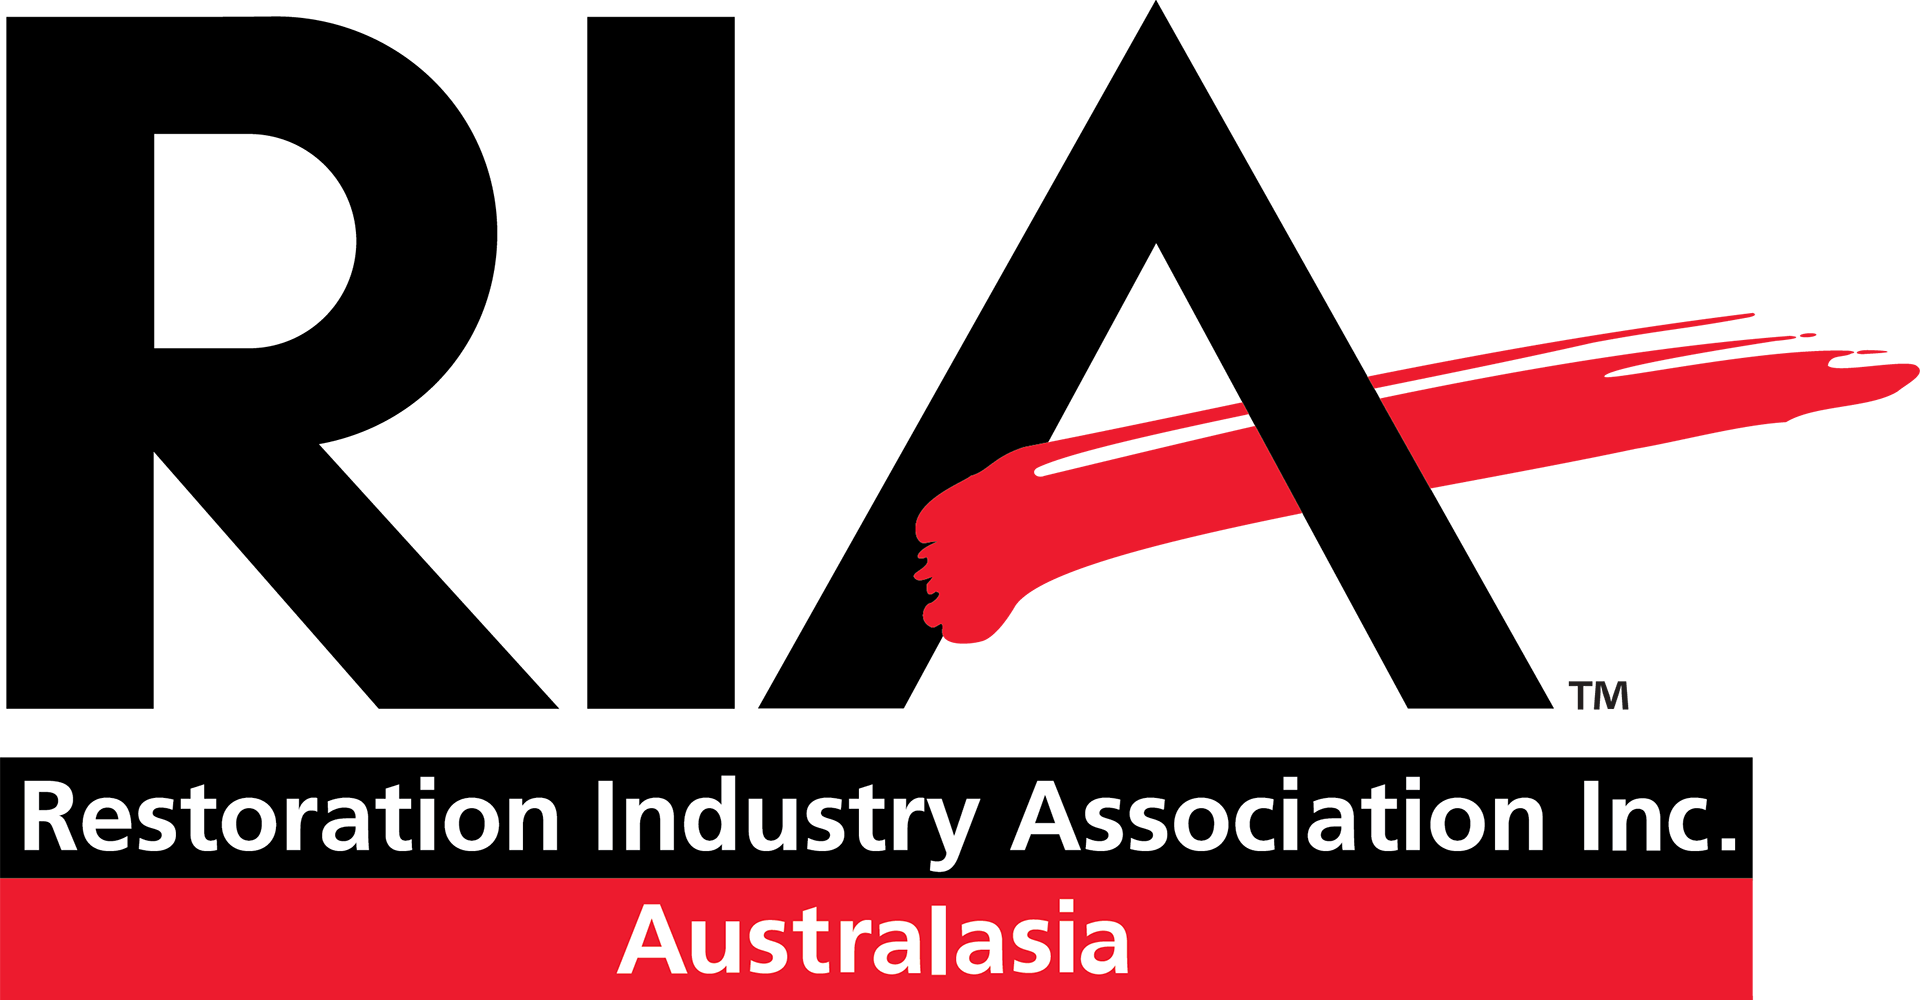 Restoration Industry Association (RIA) Australasia